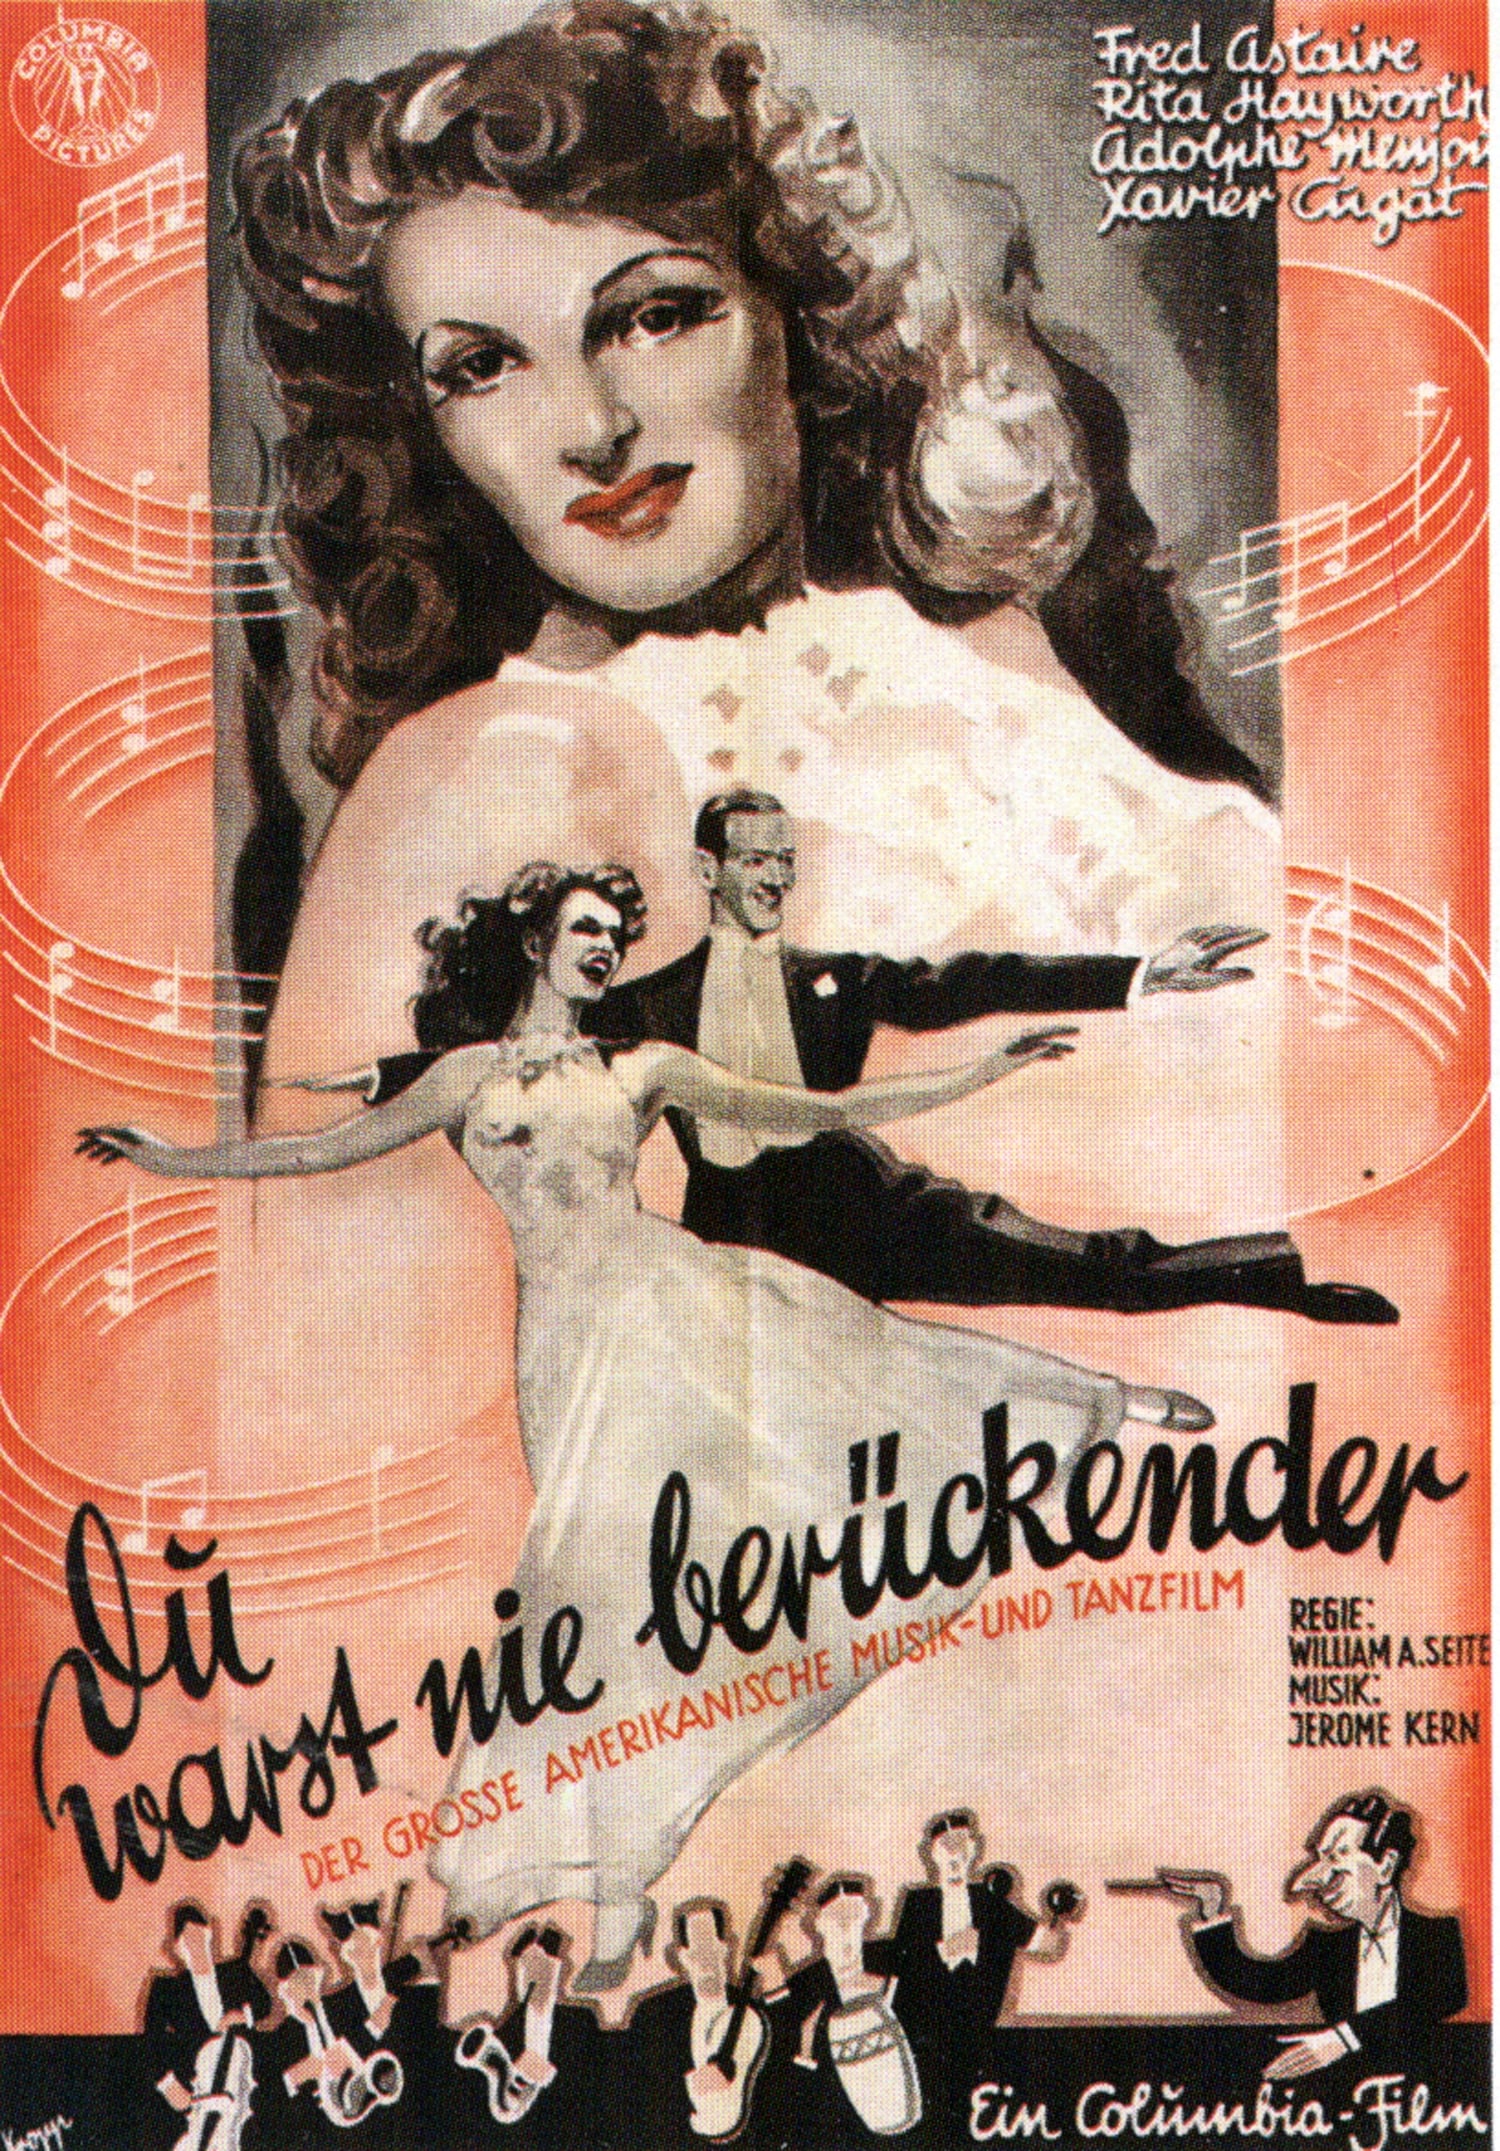 You Were Never Lovelier (1942)